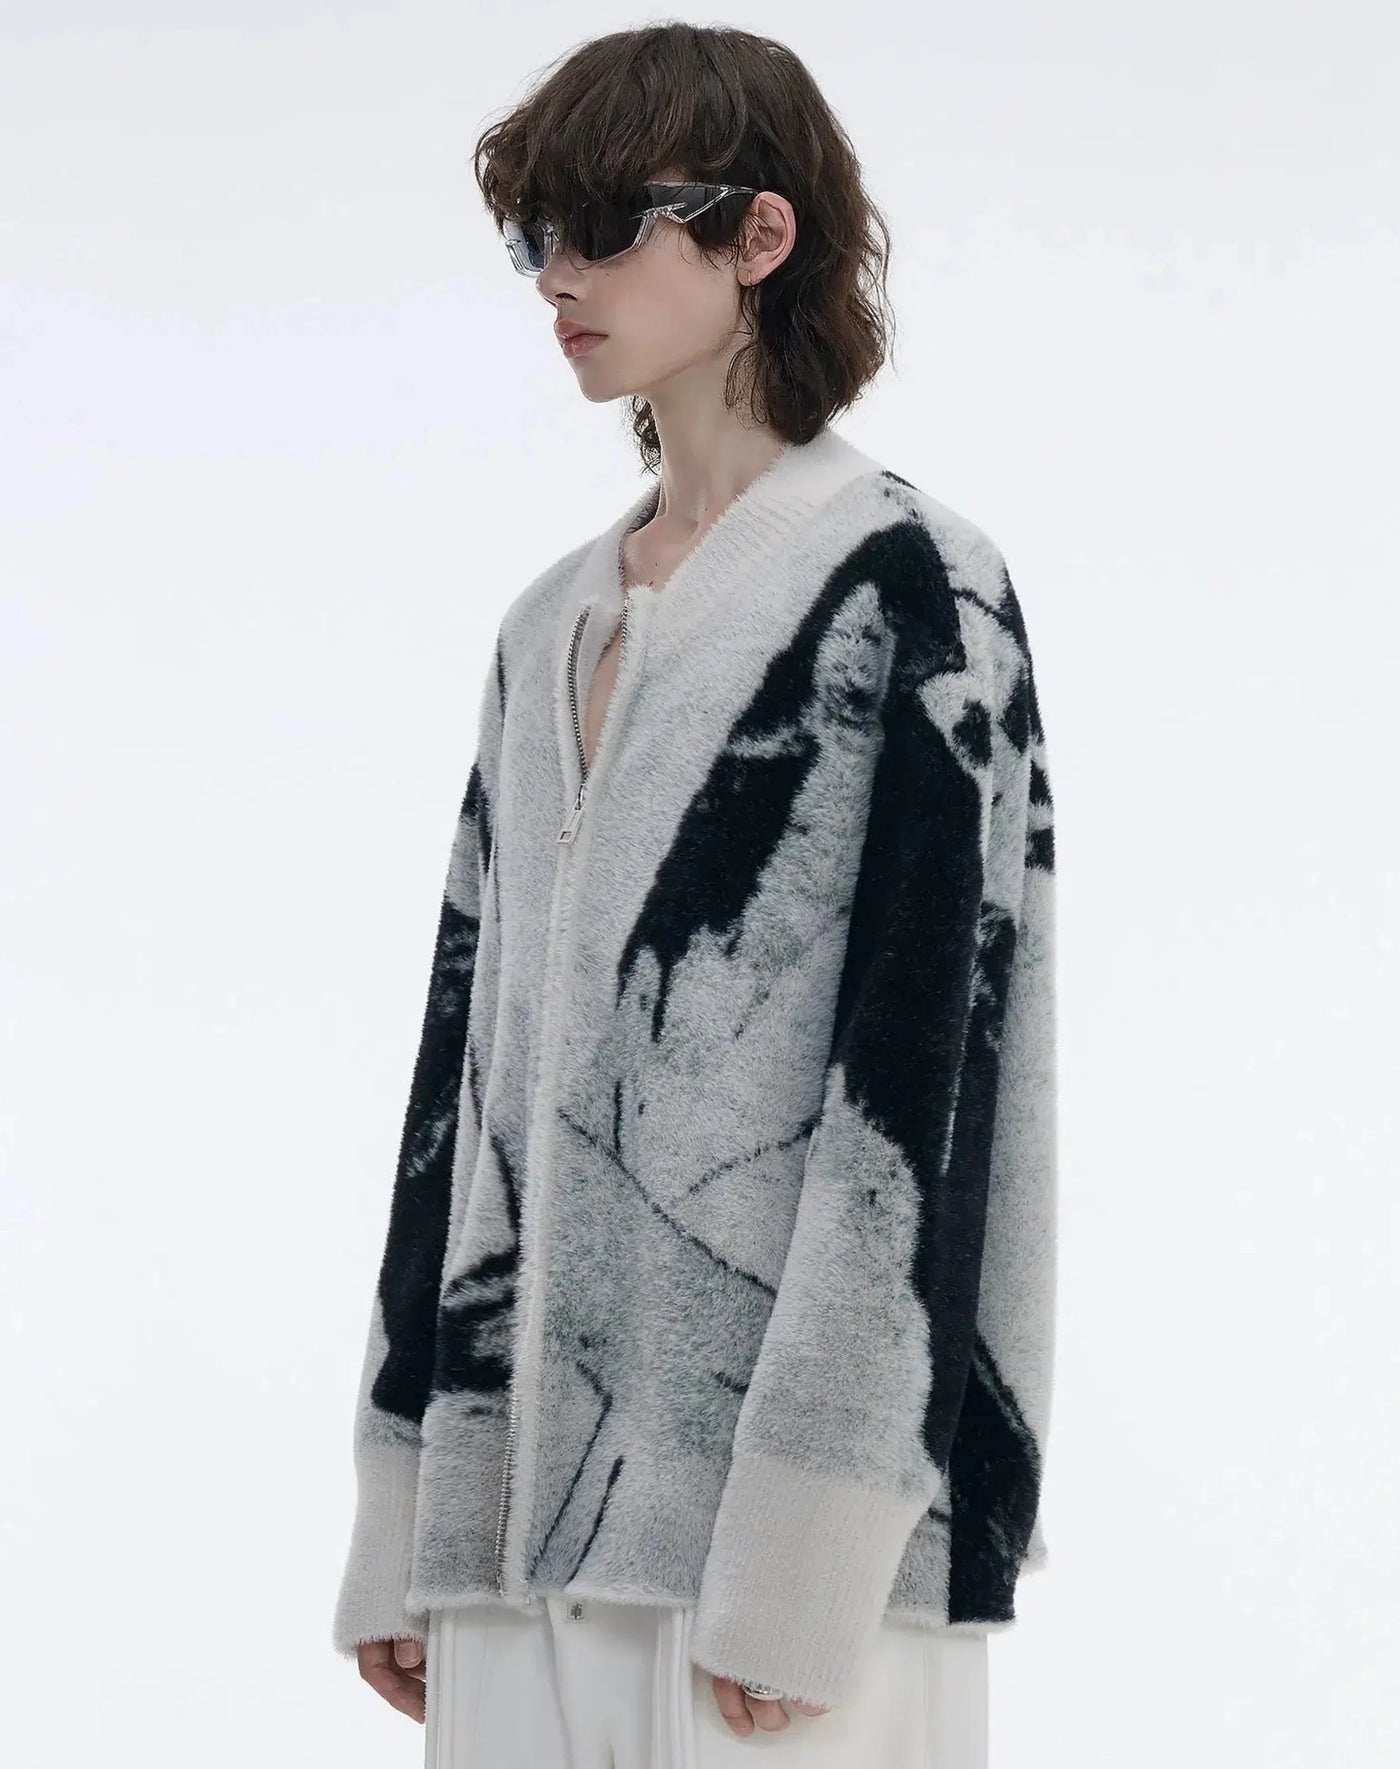 TIWILLTANG Paint Abstract Splatters Zipped Jacket Korean Street Fashion Jacket By TIWILLTANG Shop Online at OH Vault